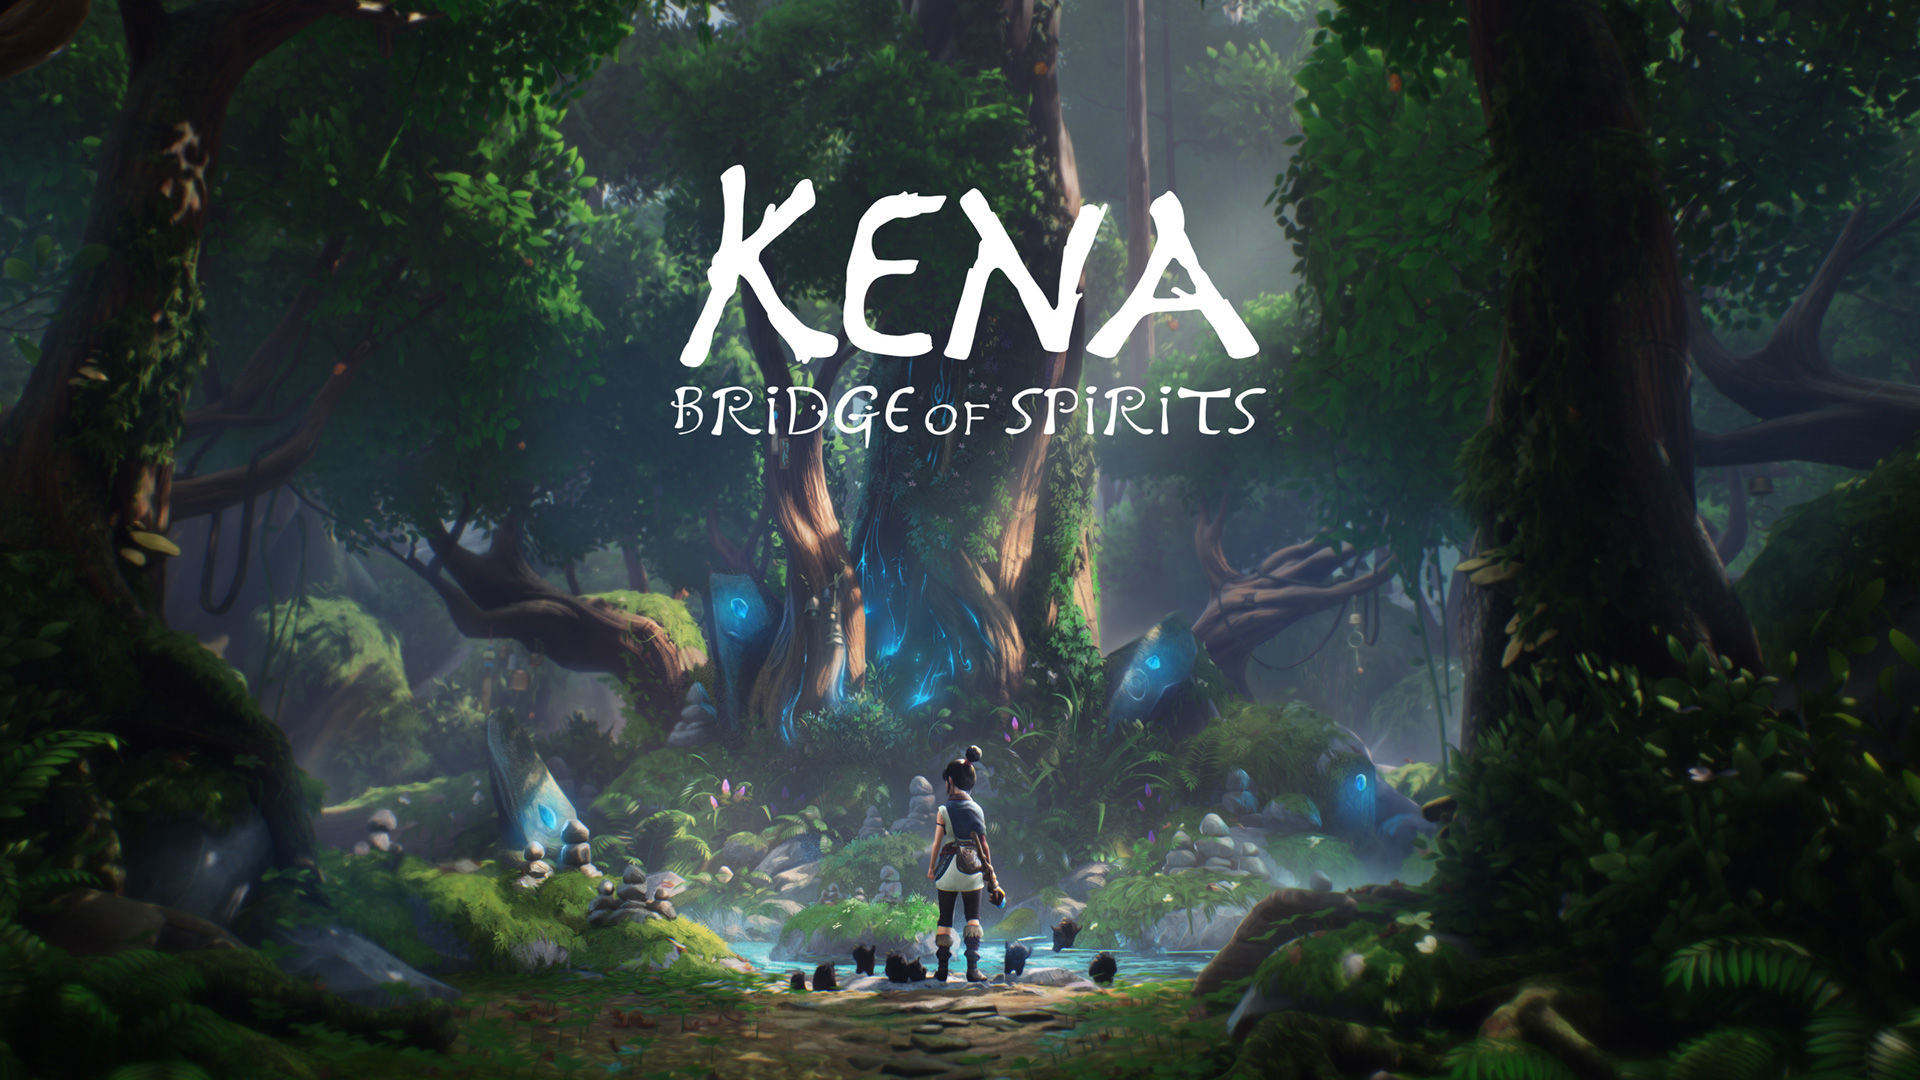 Download Kena Bridge of Spirits v1.14-P2P in PC [ Torrent ]